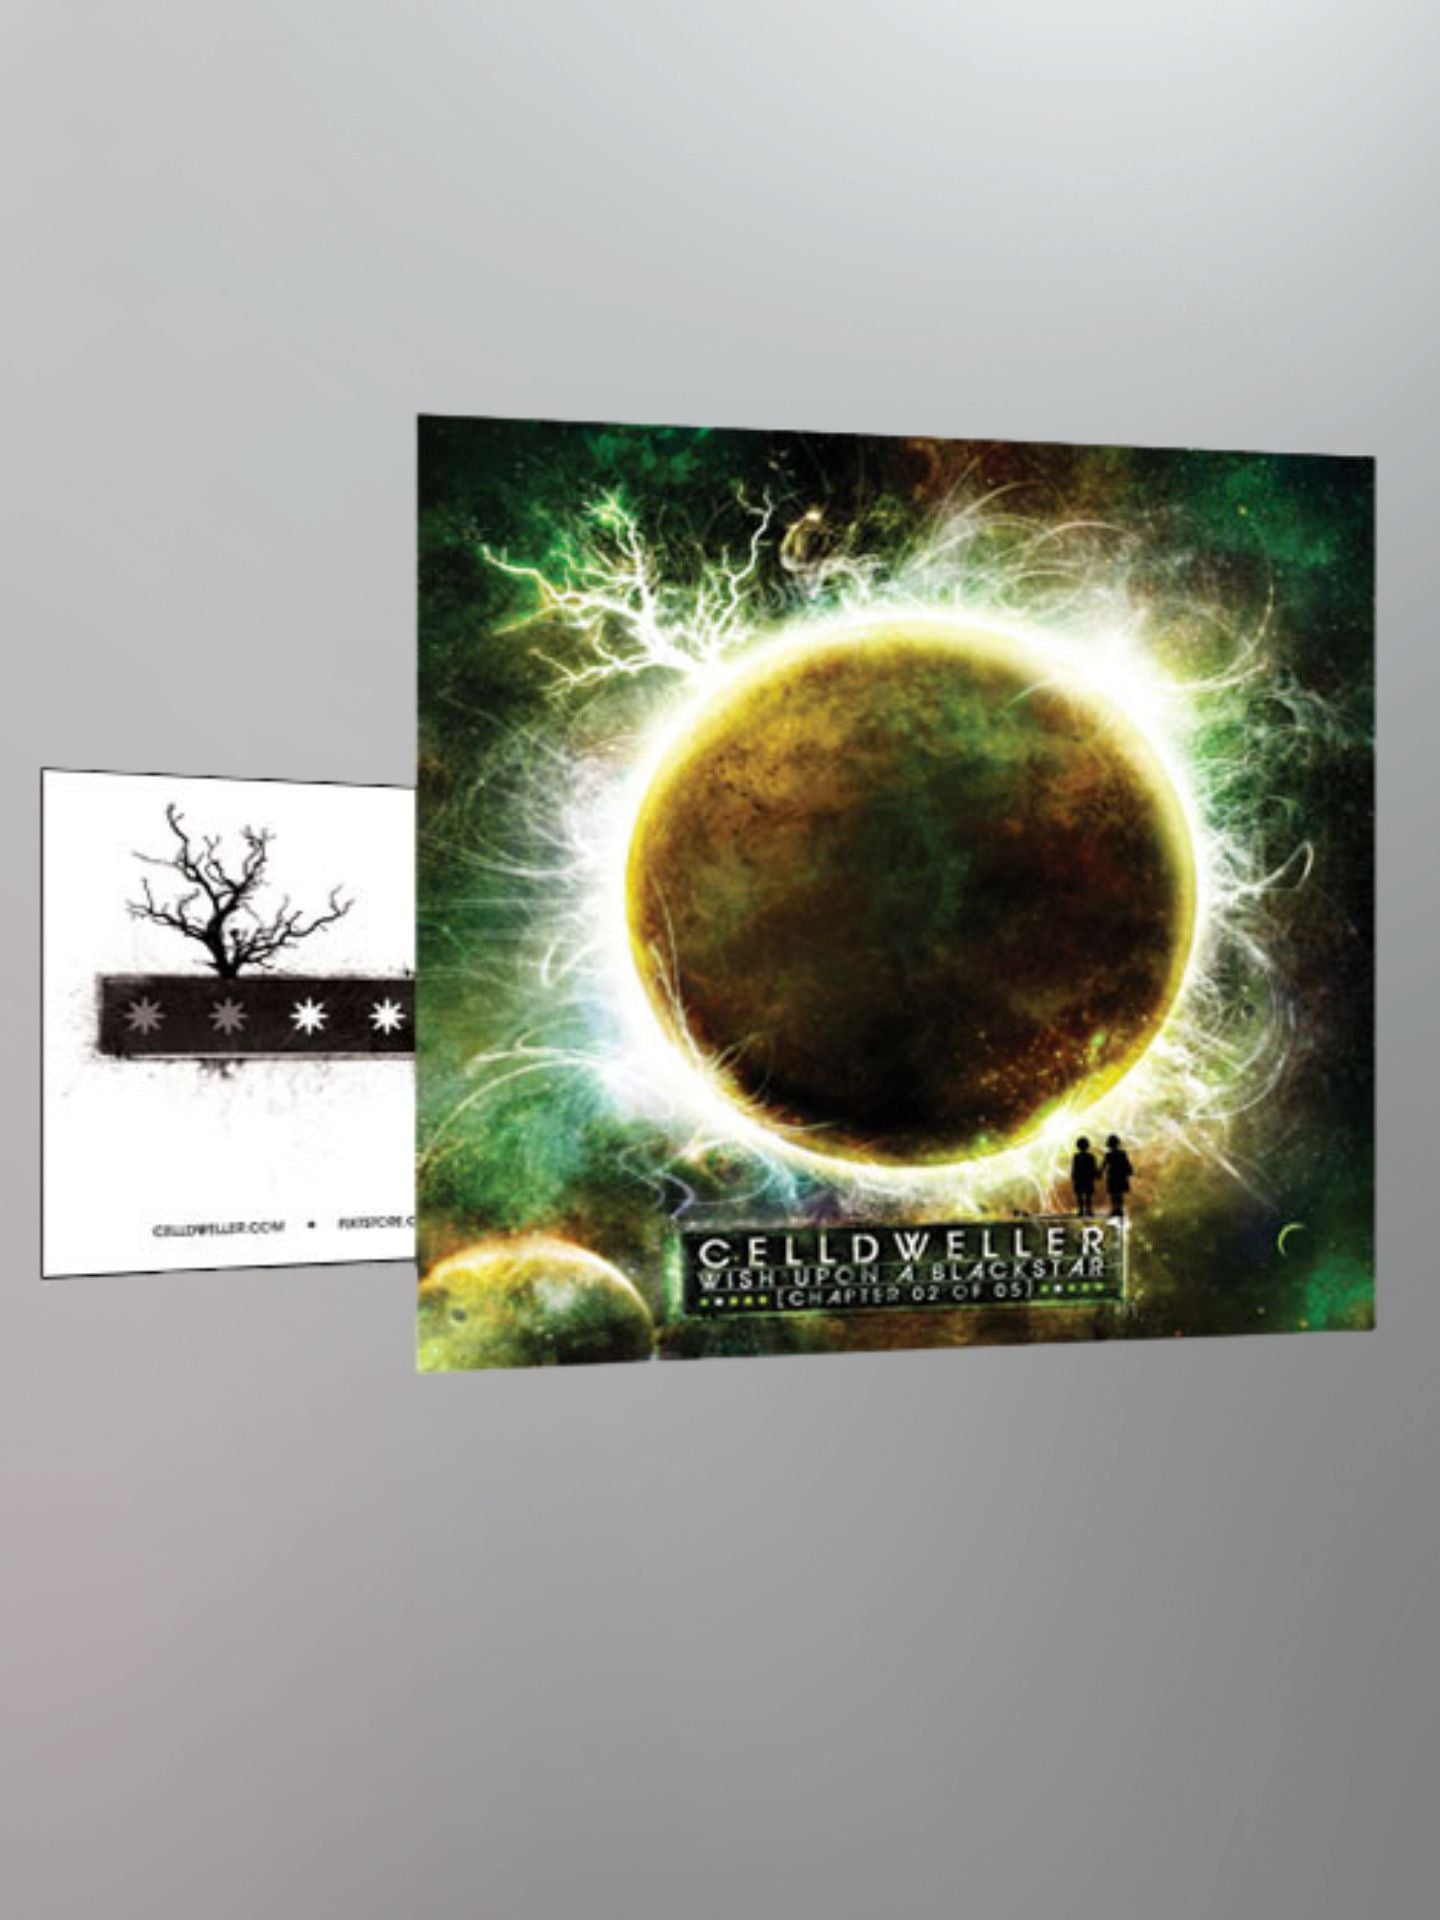 Celldweller - Wish Upon A Blackstar: Chapter 2 Vinyl Sticker